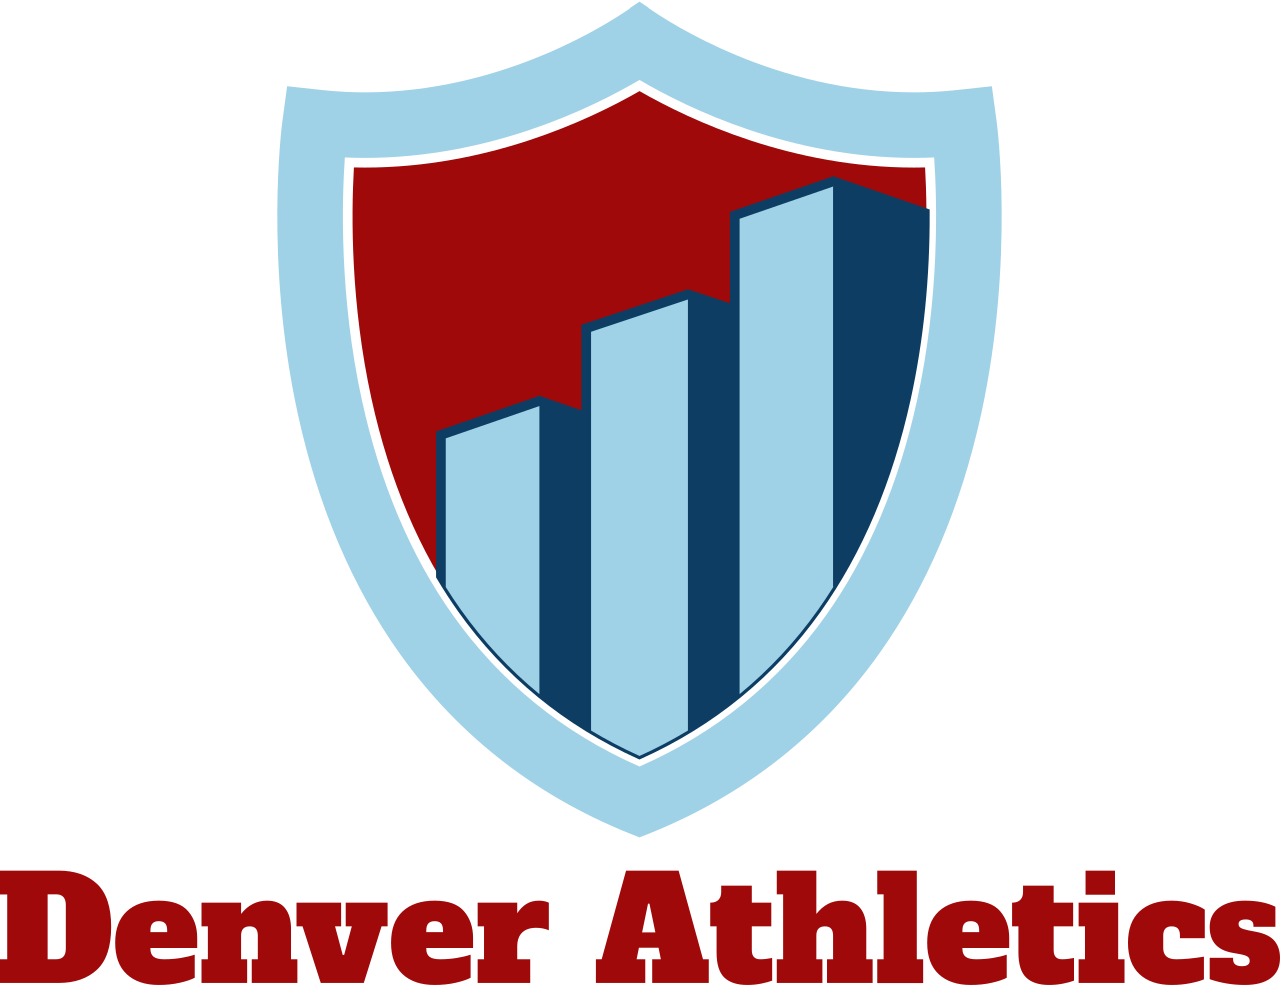 Denver Athletics's web page